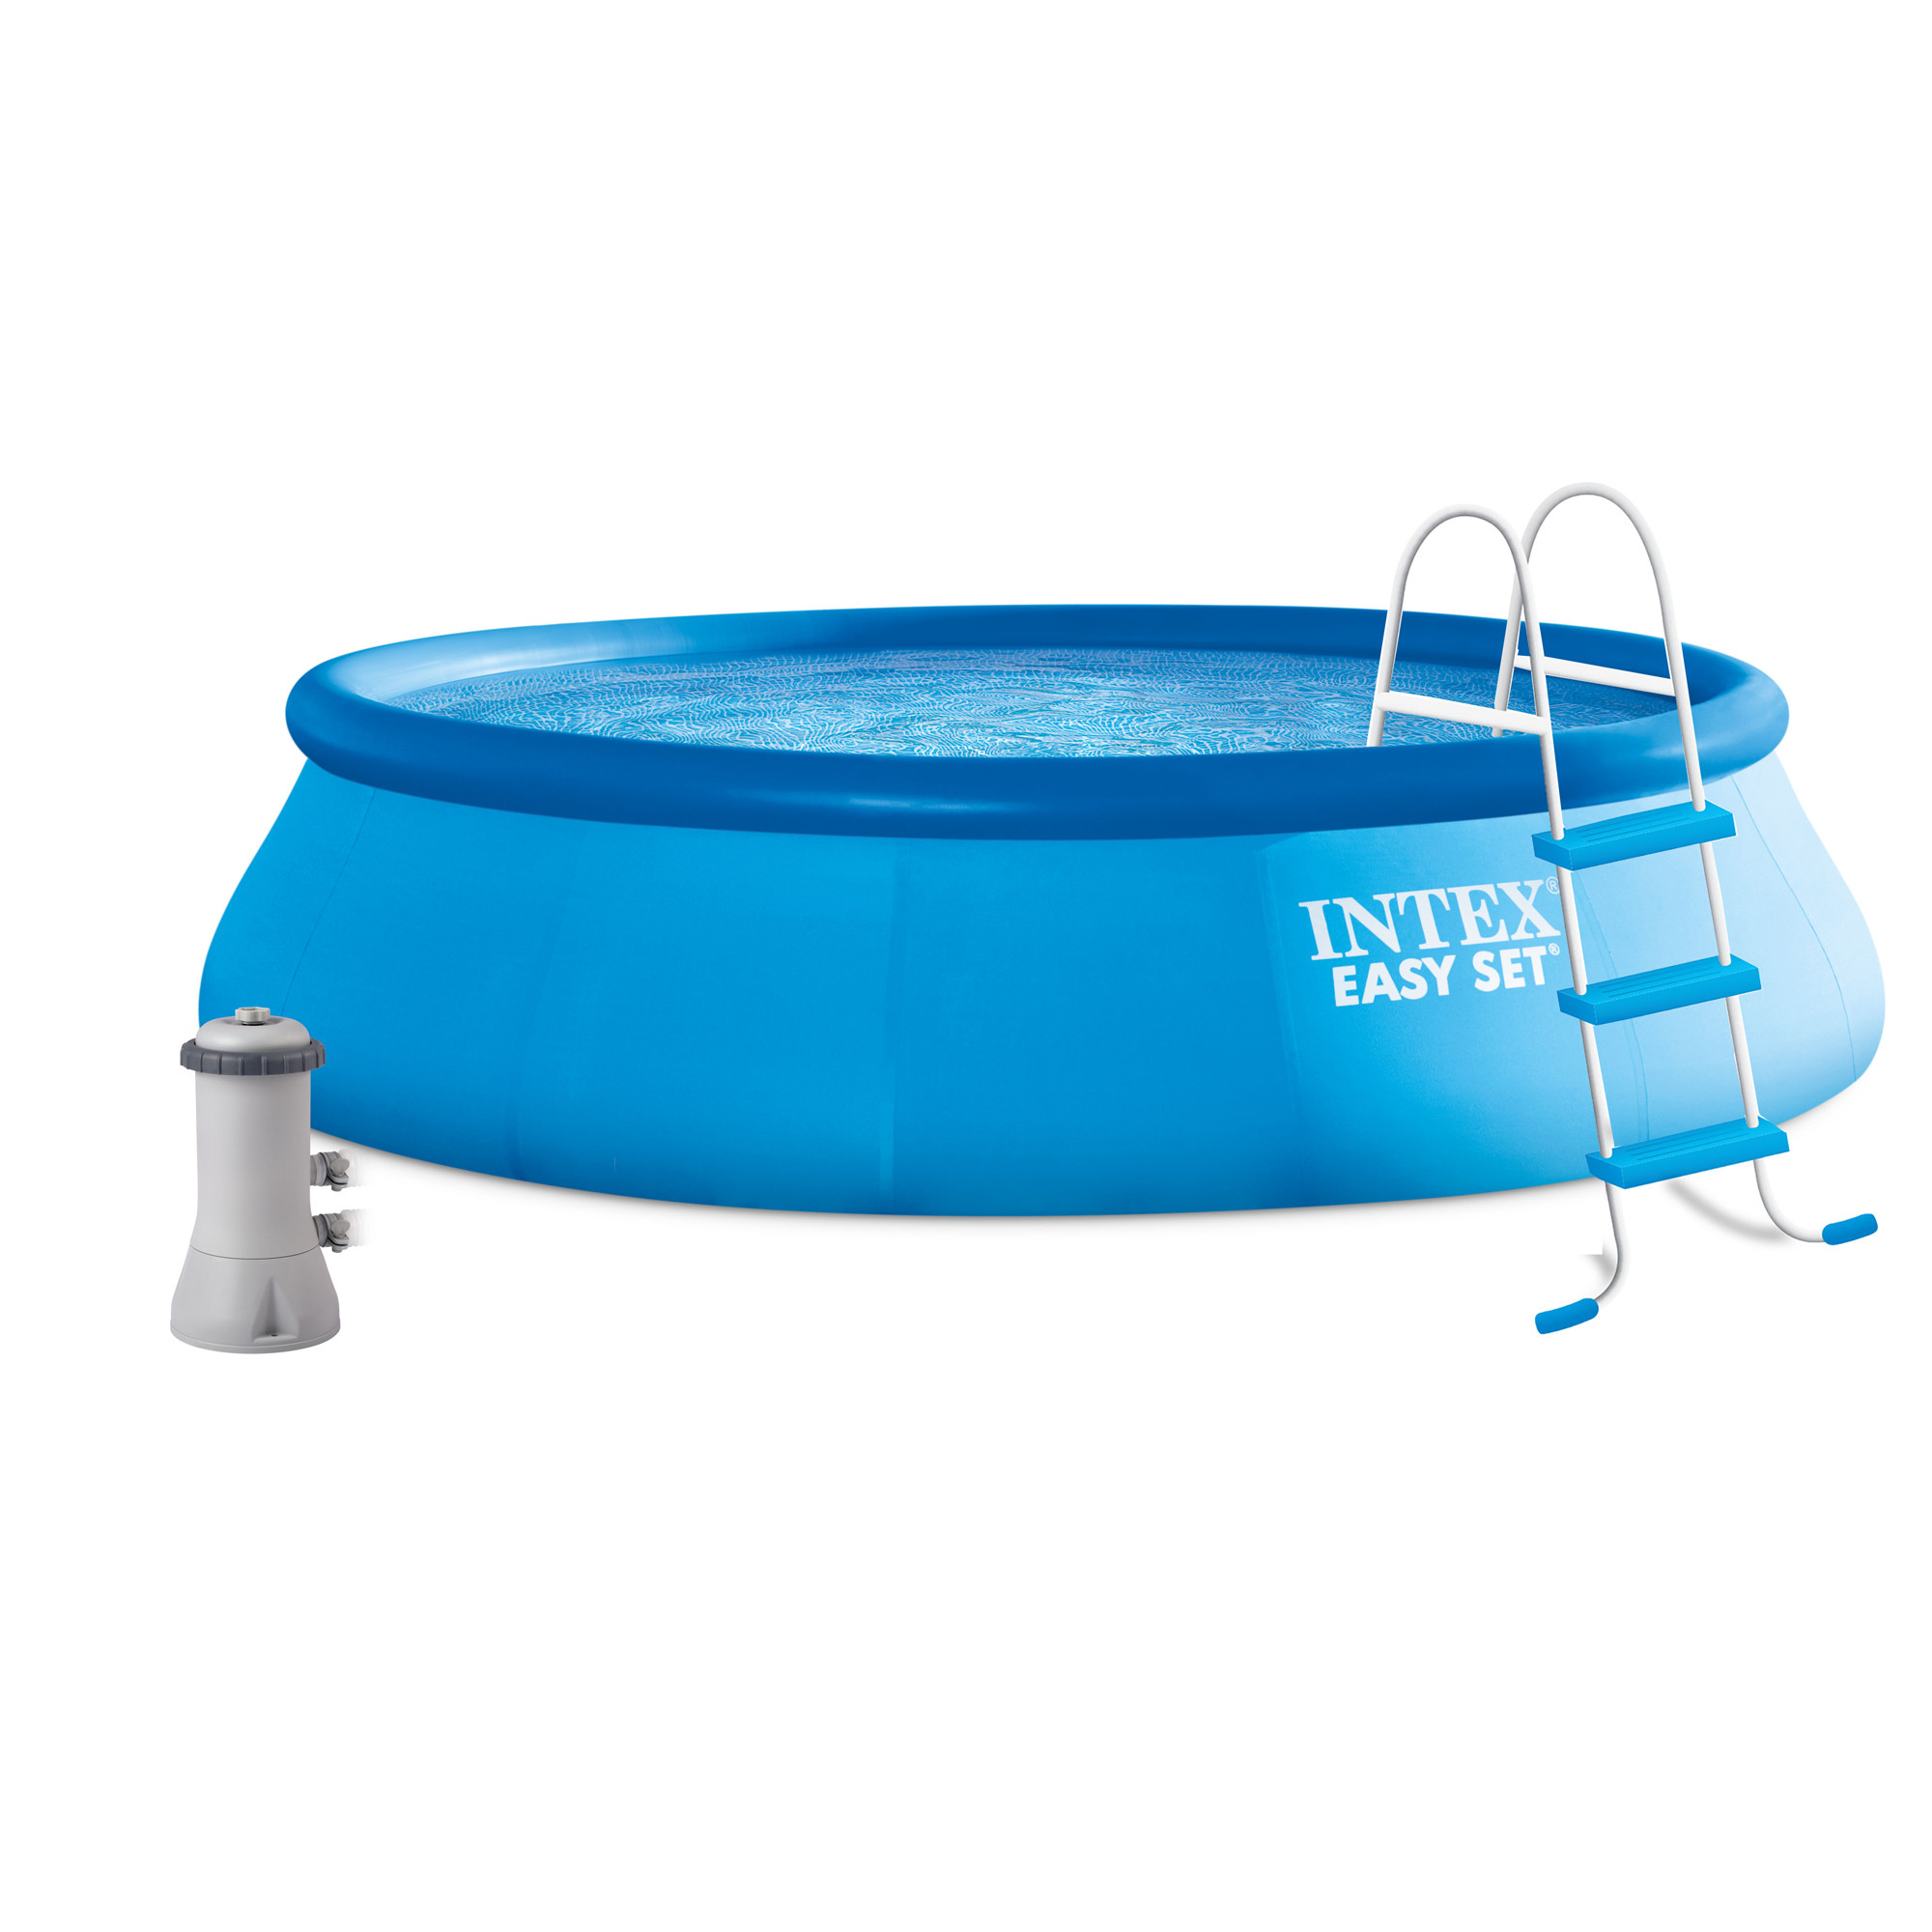 Walmart Above Ground Swimming Pool
 Intex 16 x 42" Easy Set Ground Swimming Pool Kit w